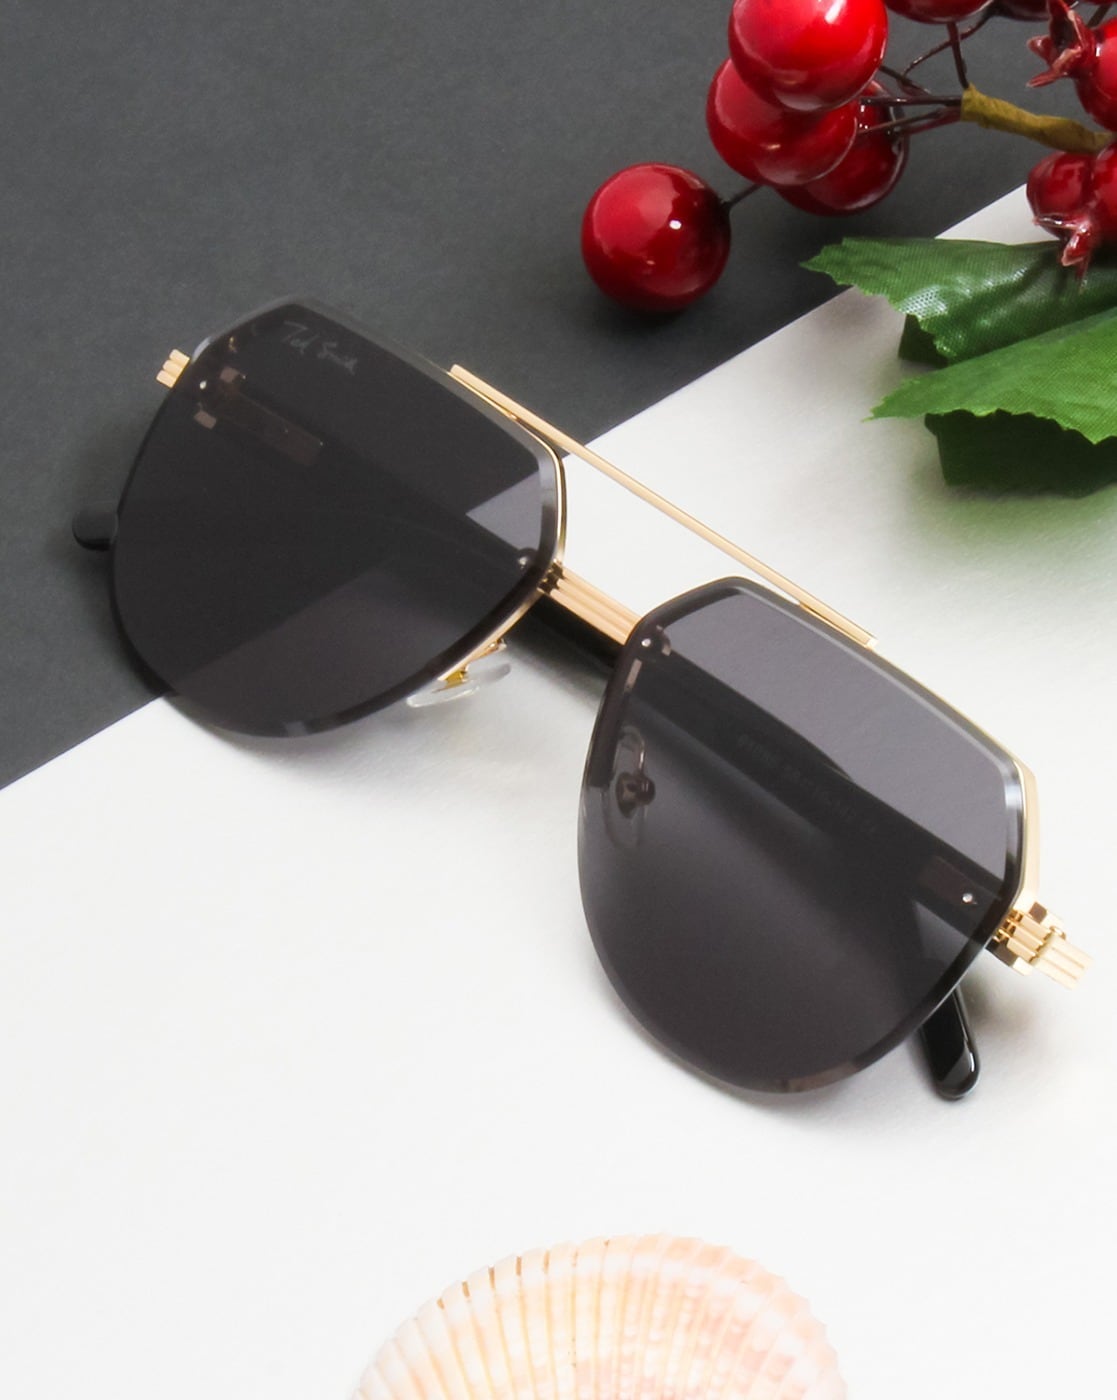 Versace | Accessories | New Ve4447 Gb87 Versace Black Gold Sunglasses Mod  4447 New Eyewear | Poshmark